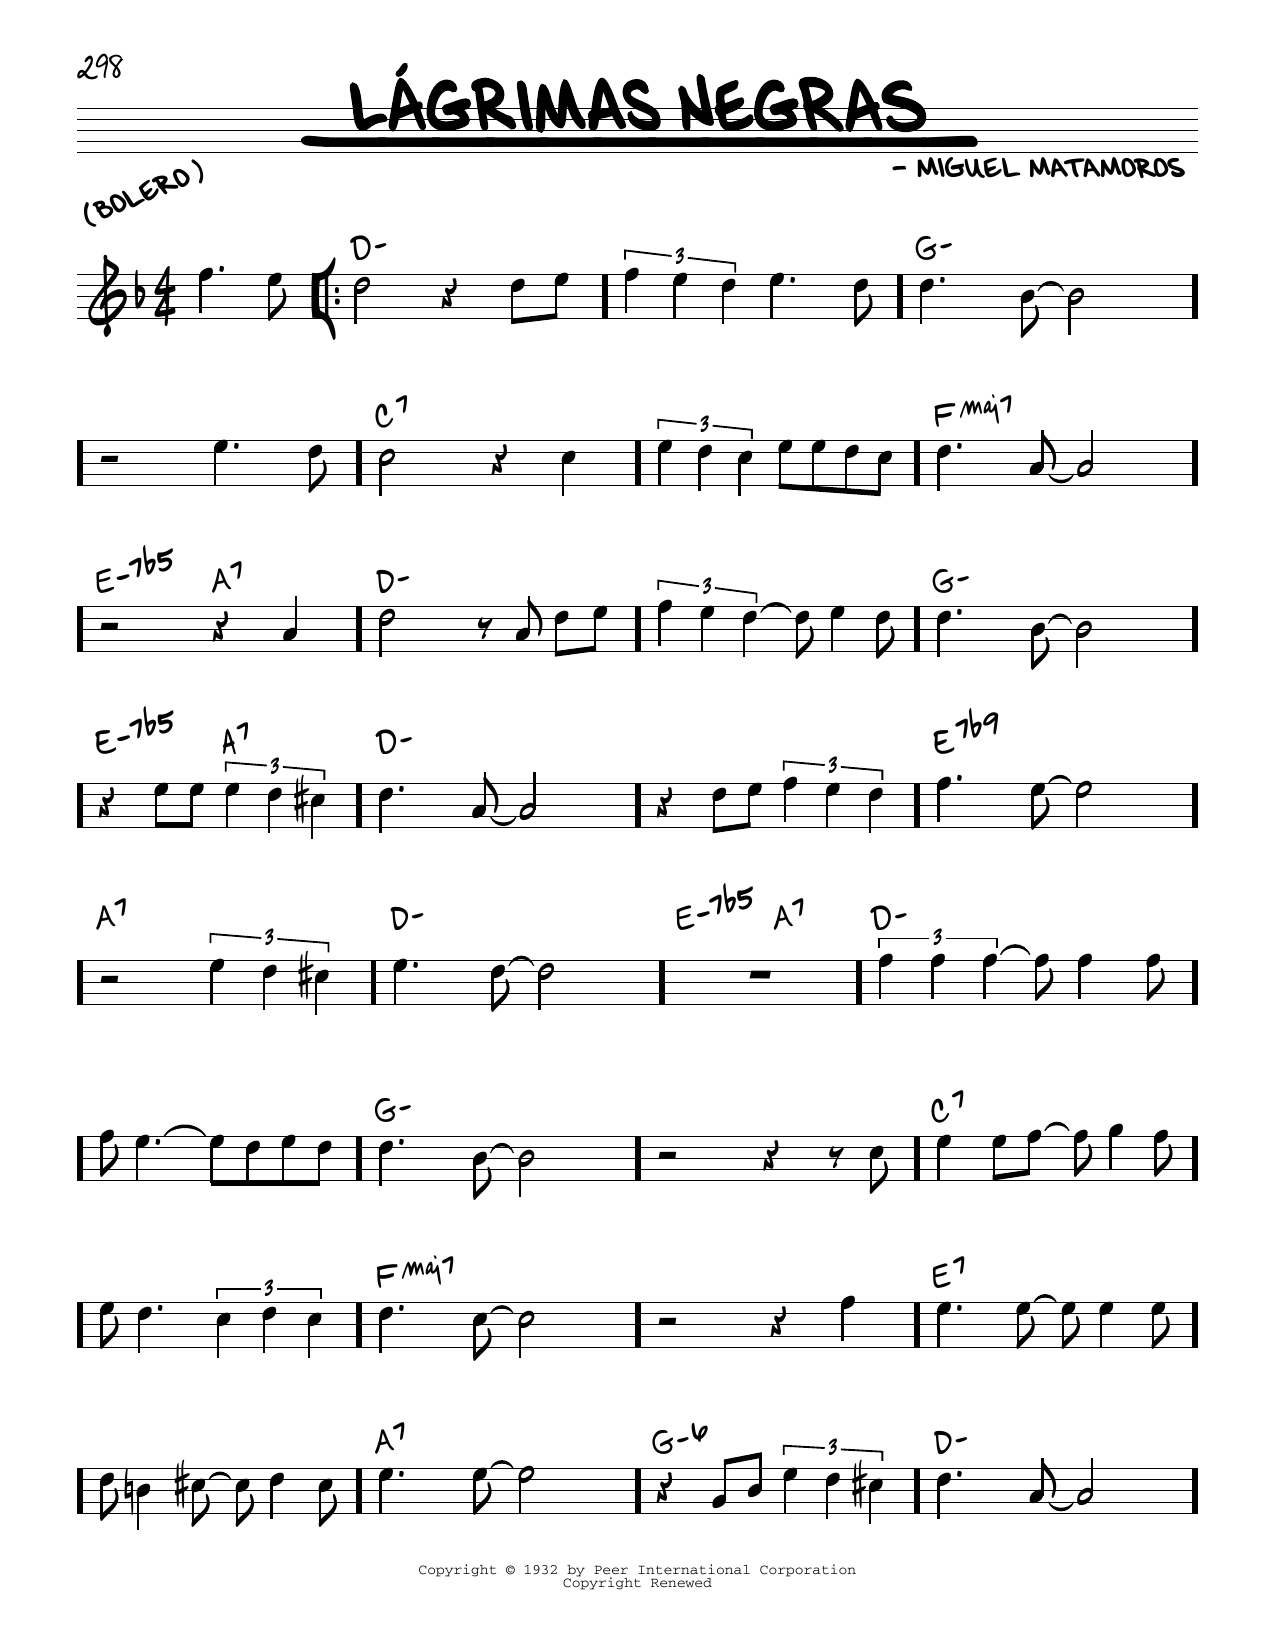 Miguel Matamoros Lagrimas Negras Sheet Music Notes & Chords for Real Book – Melody & Chords - Download or Print PDF